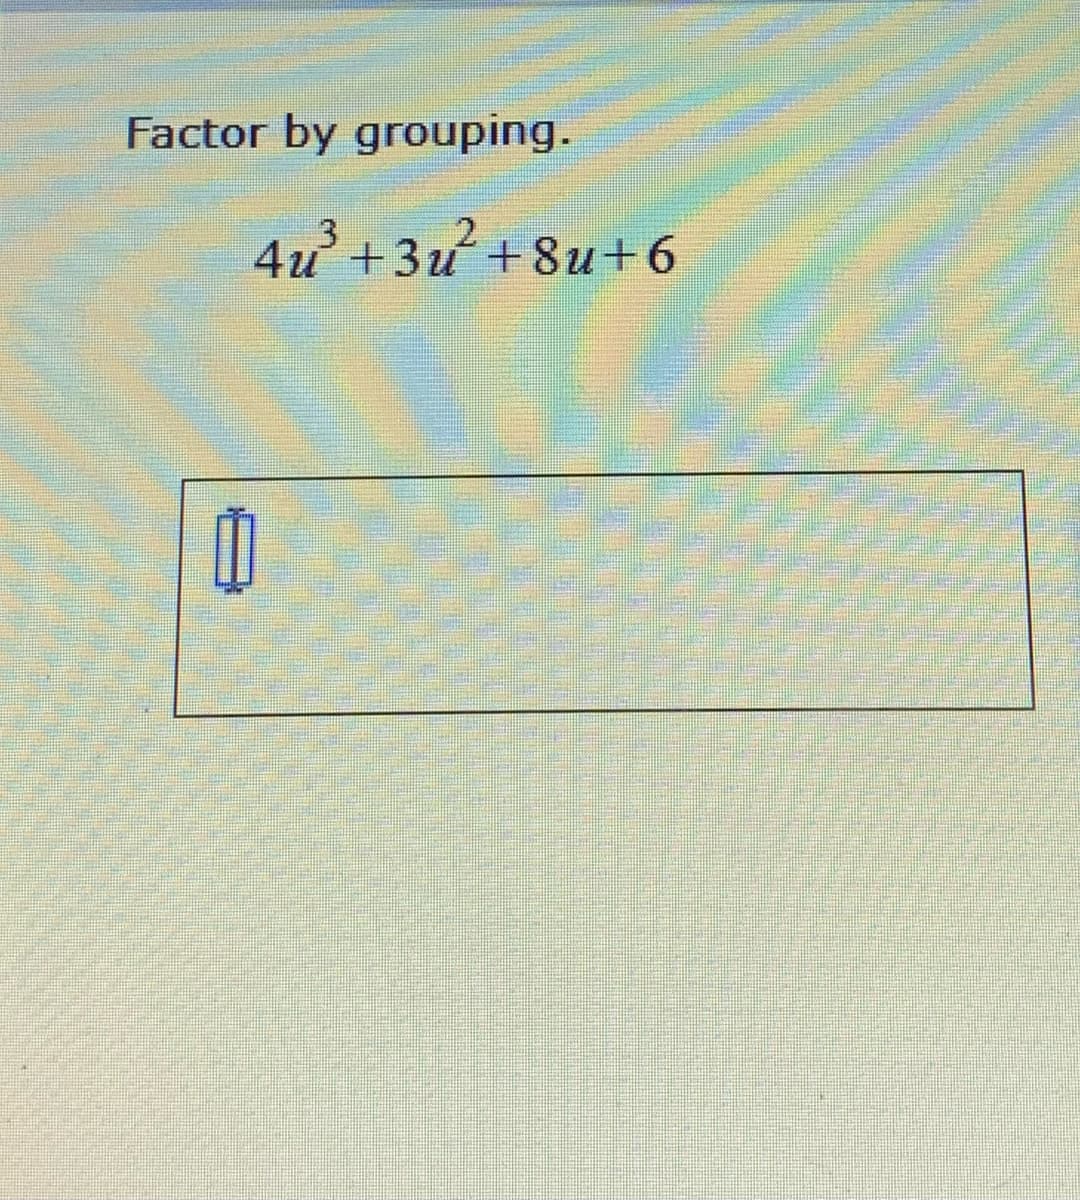 Factor by grouping.
4u'+3u +8u+6
